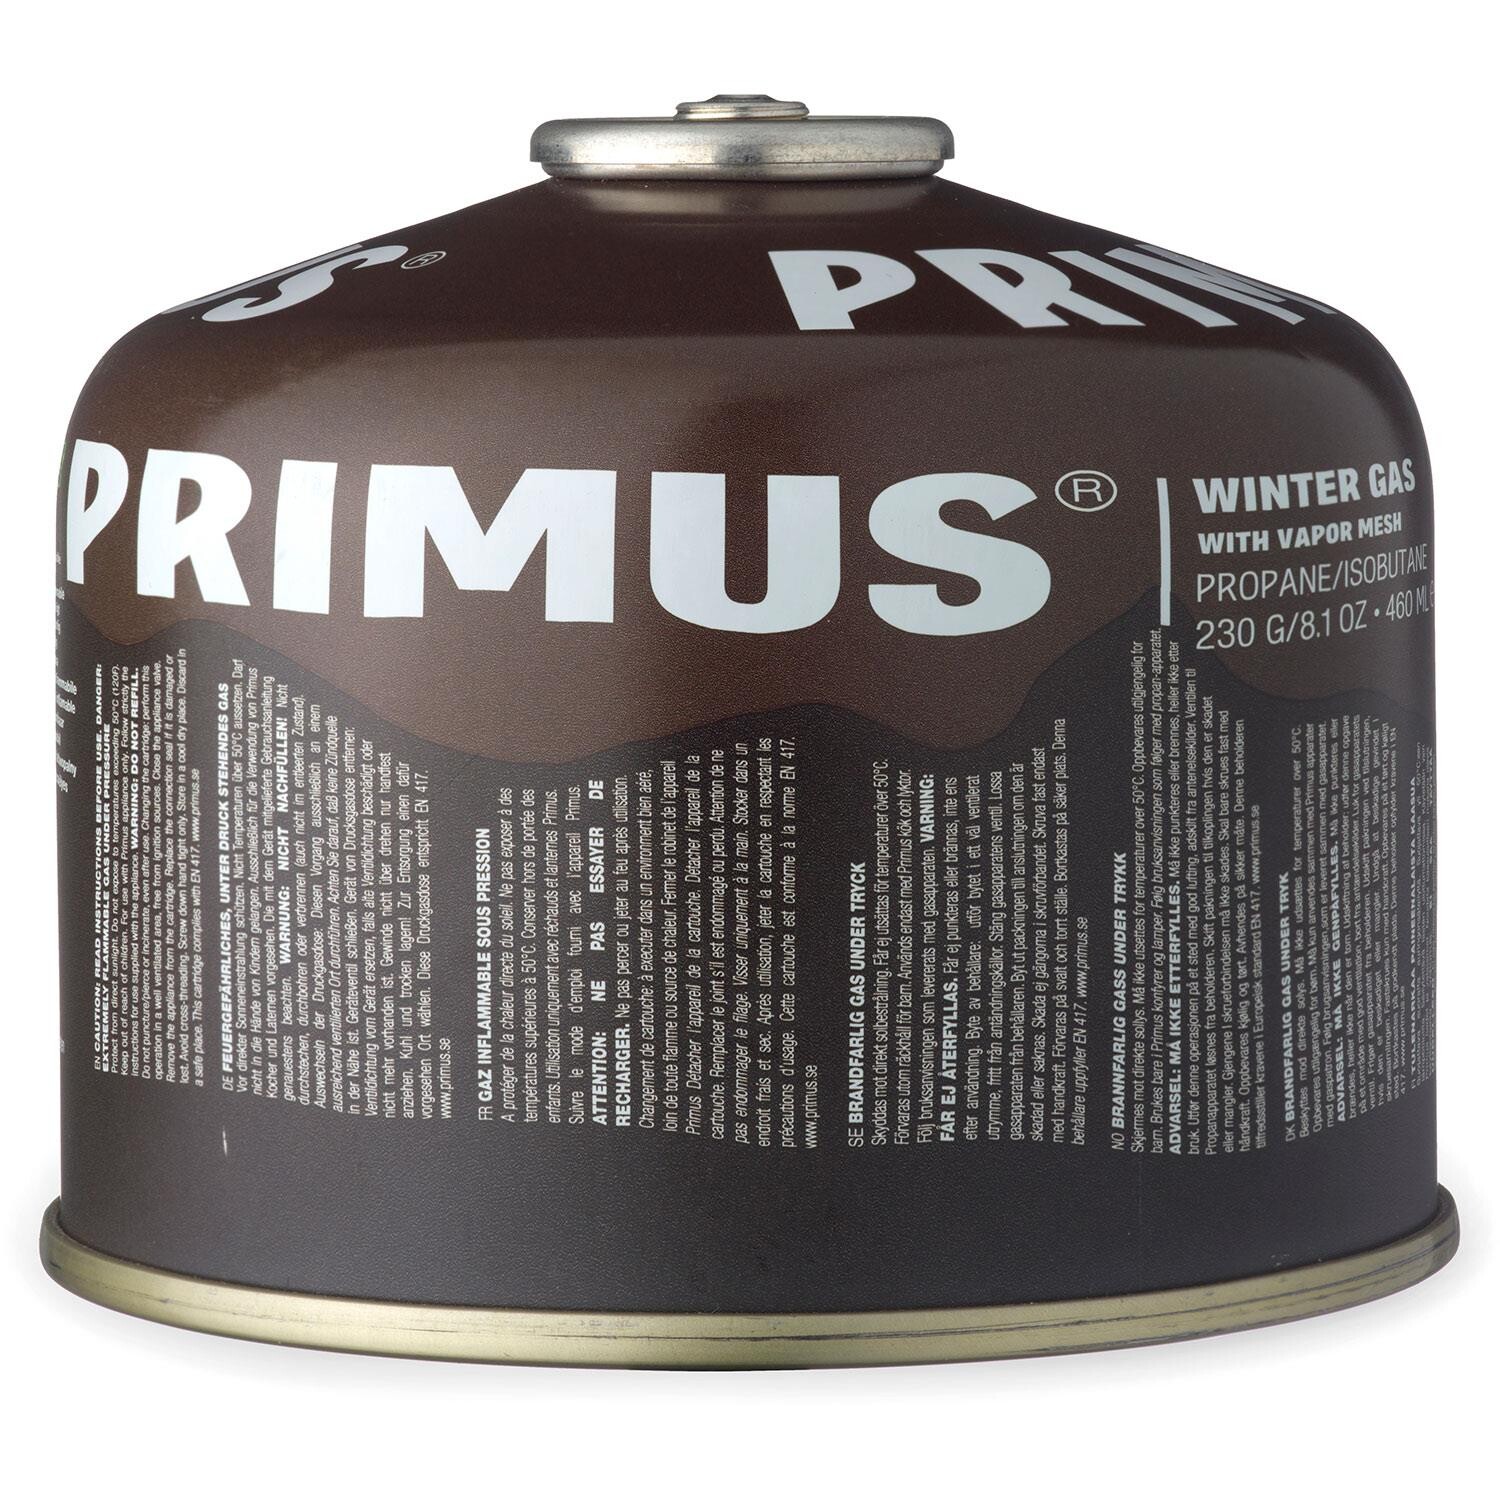 Primus Winter Gas 230 g 